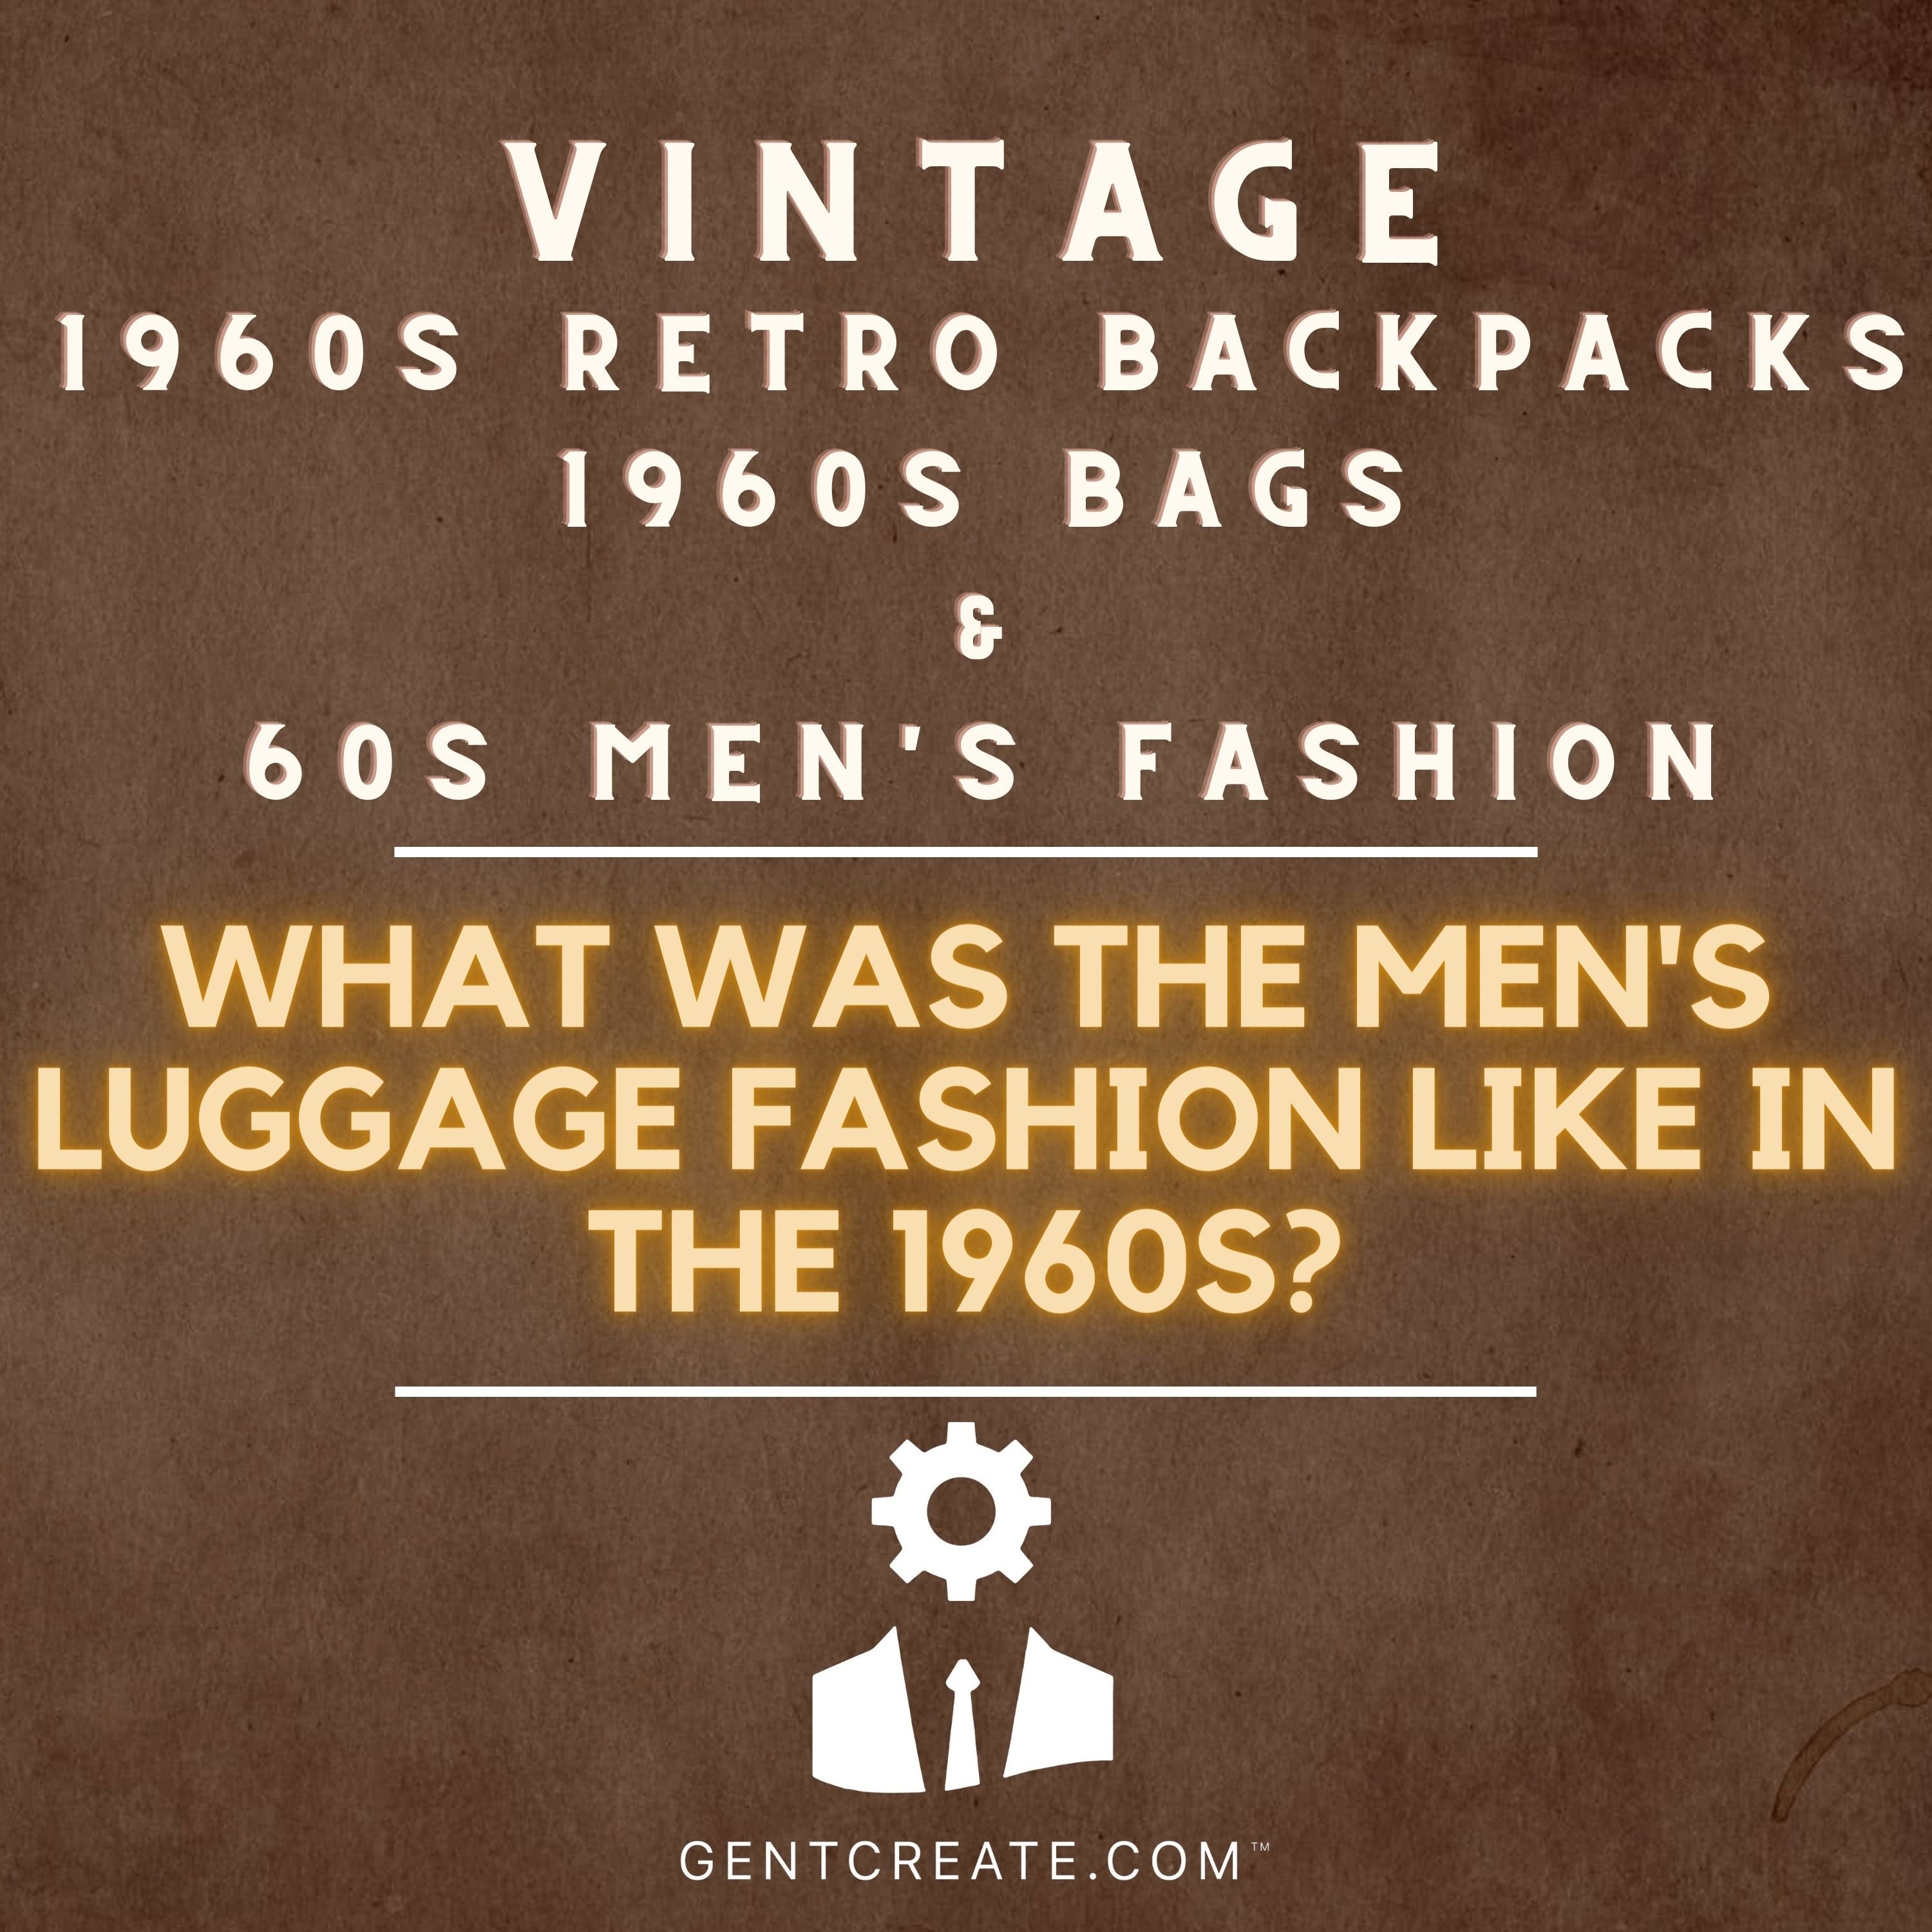 1960S RETRO BACKPACKS & 1960S BAGS 60S MEN'S FASHION